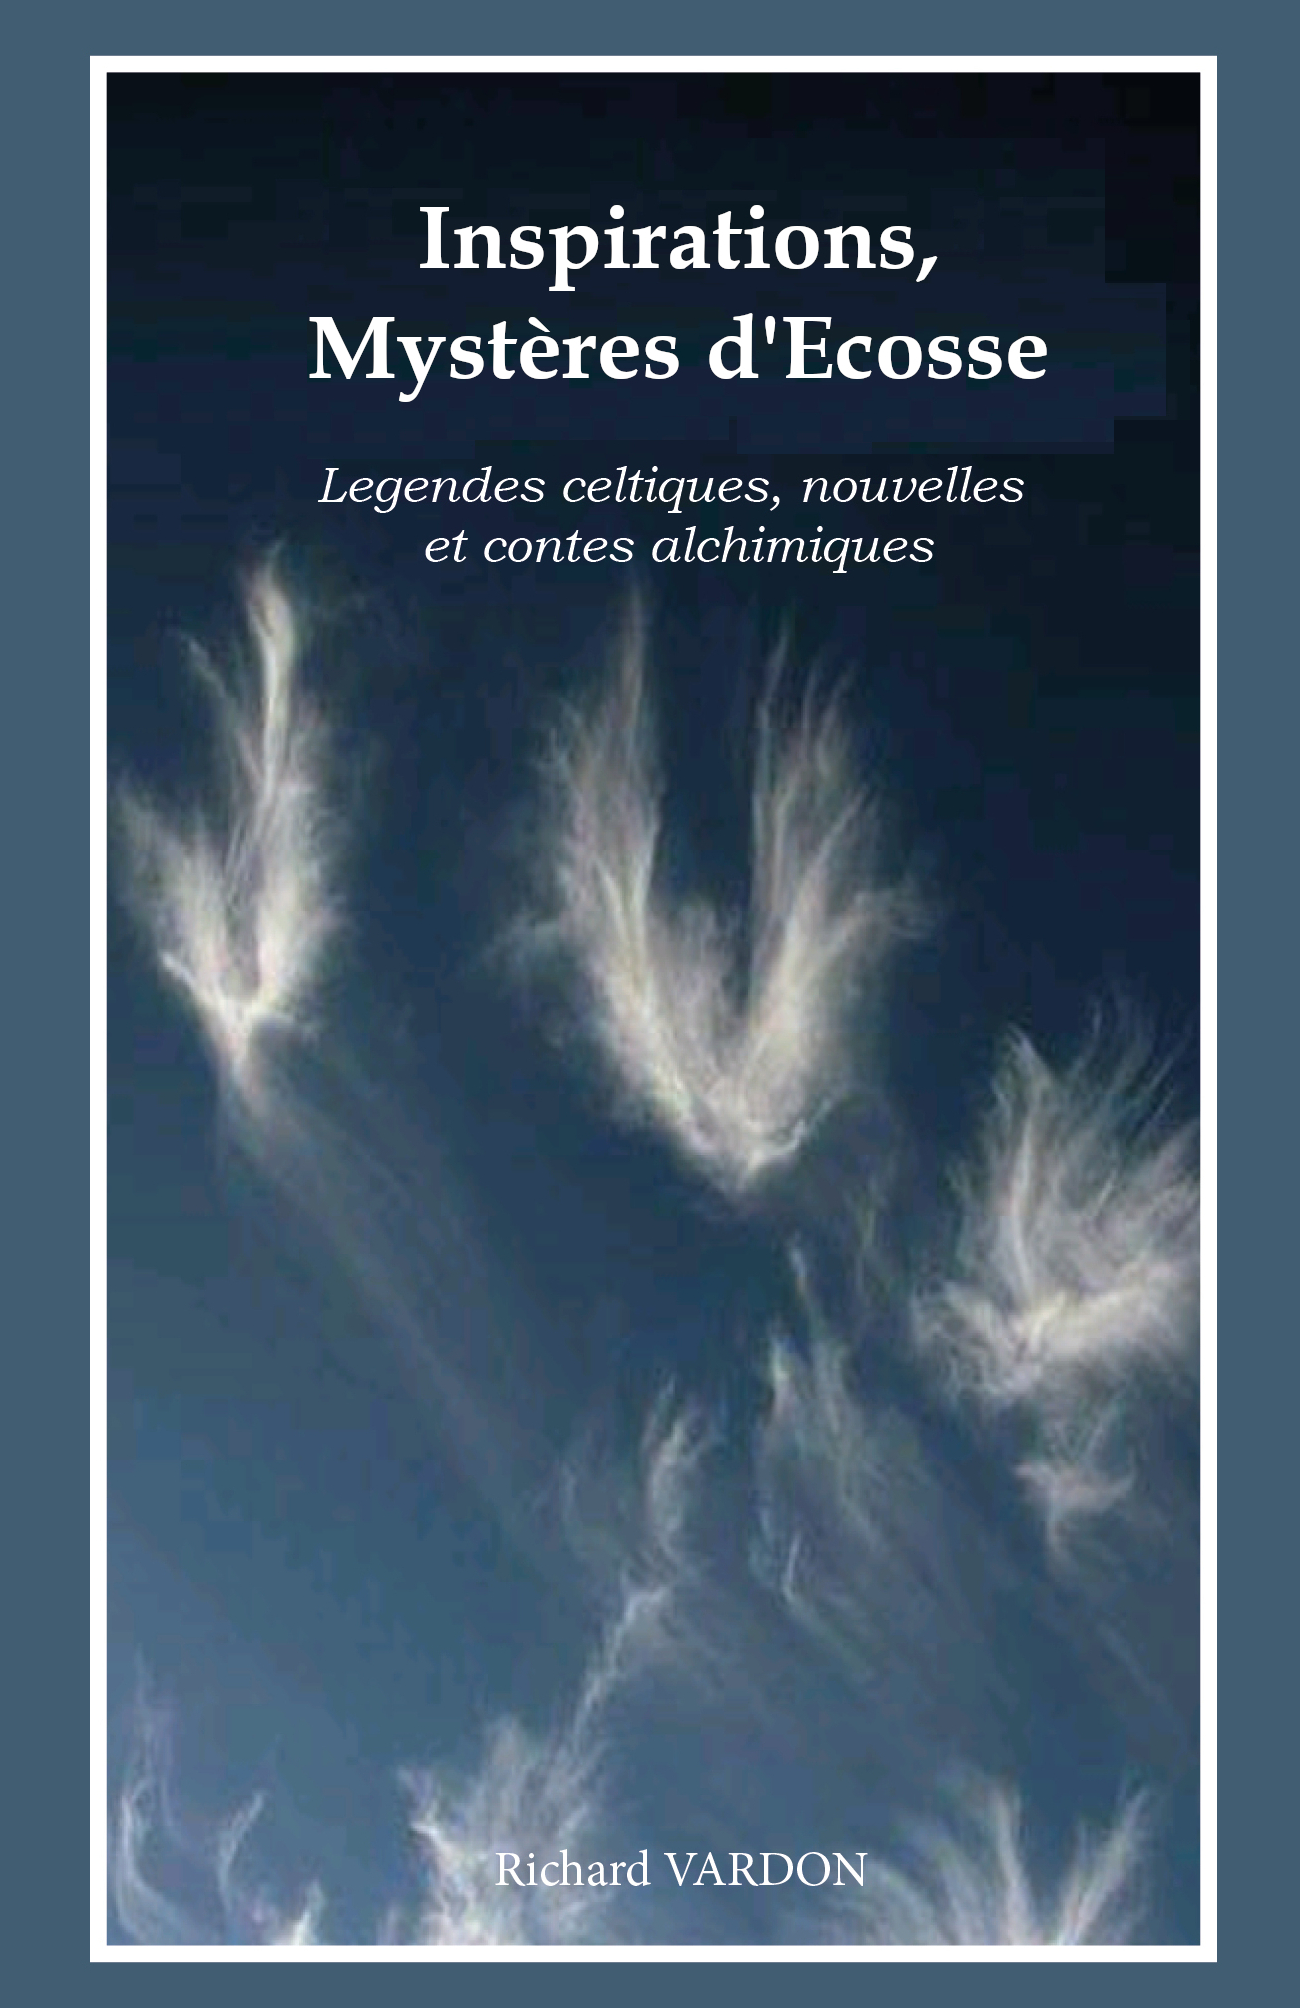 Inspirations Mysteres d'Ecosse